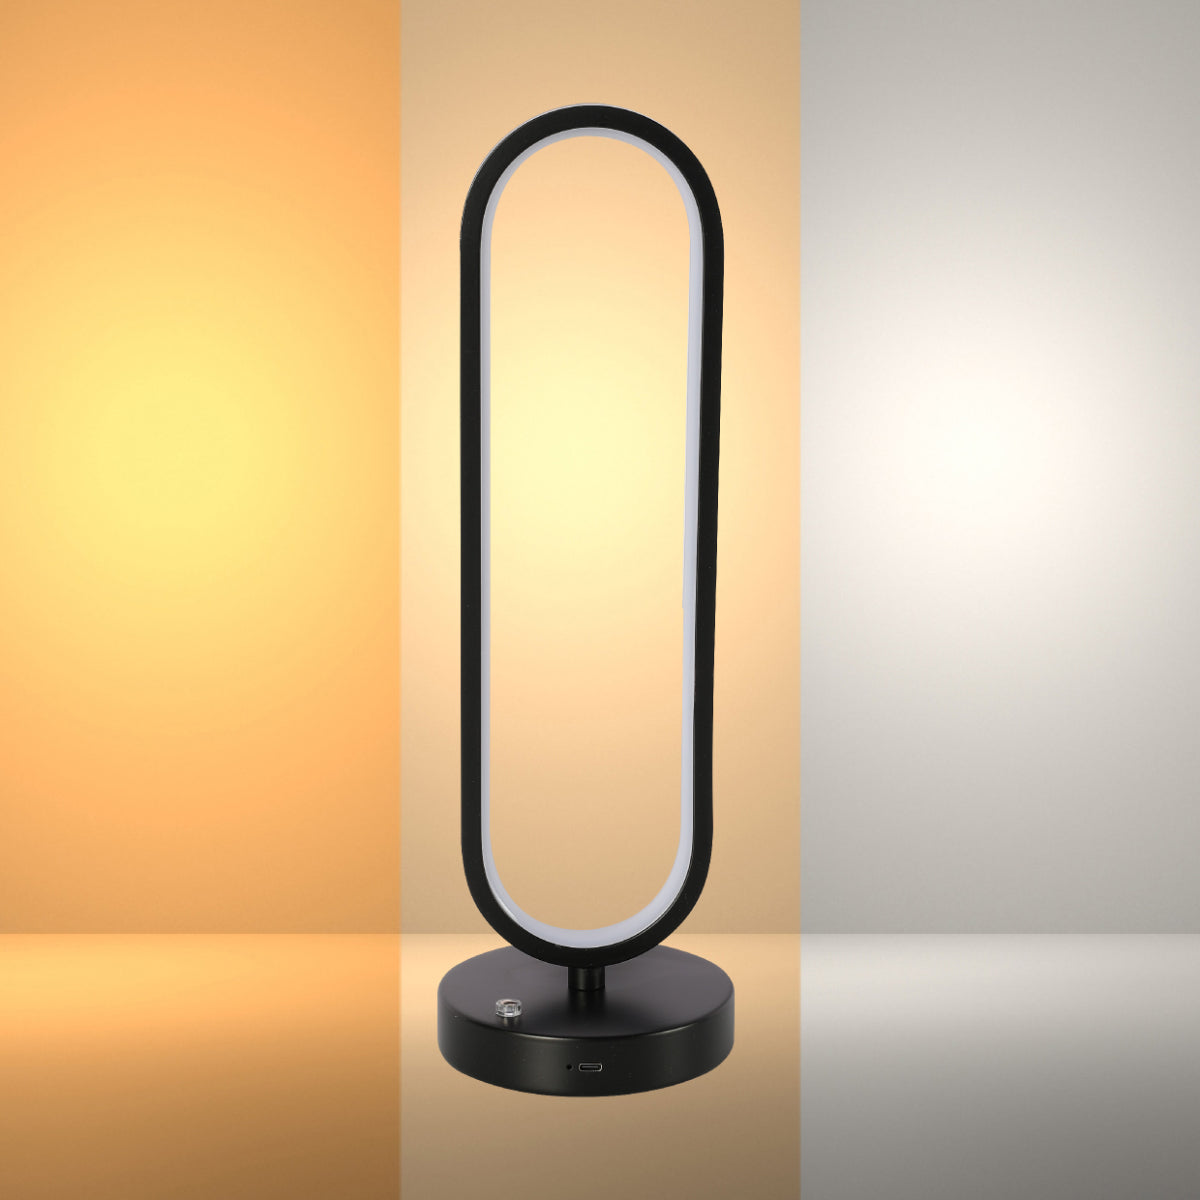 Main image of Minimalist Oval Table Lamp with 3 CCT LED - Black Finish 130-03643